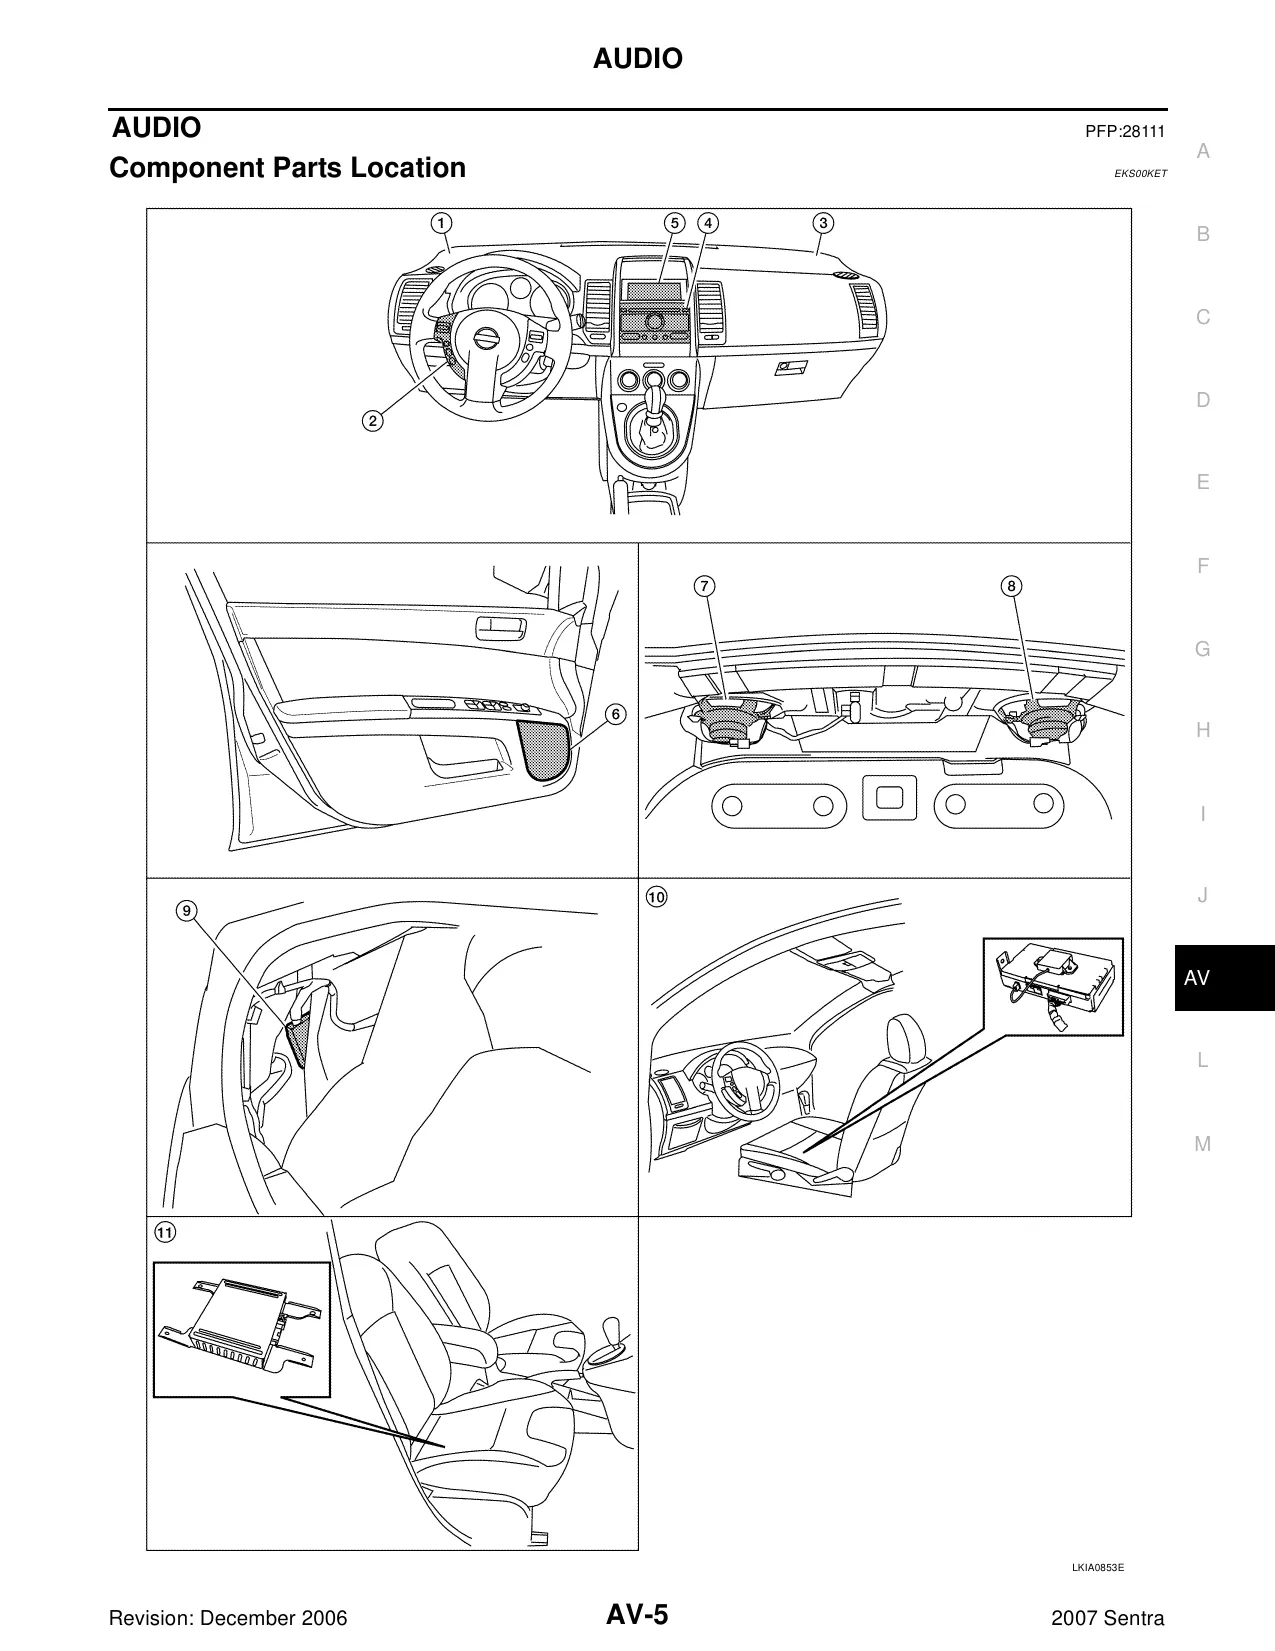 2007 Nissan Sentra shop manual Preview image 5